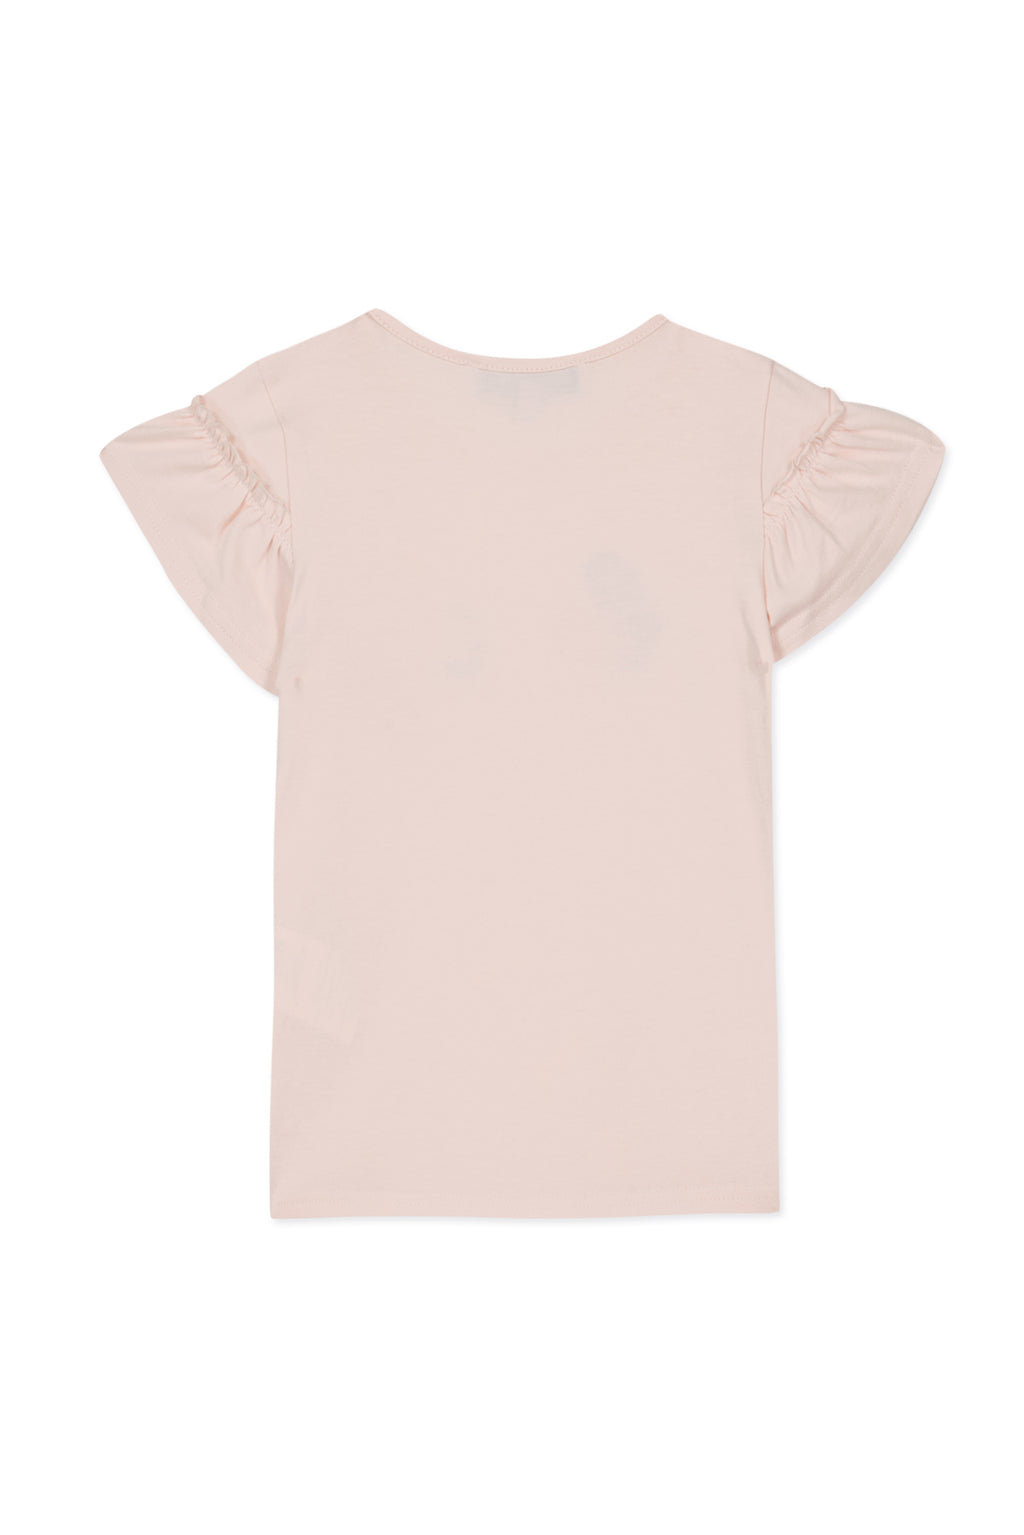 T-shirt - Pale pink Illustration lovely